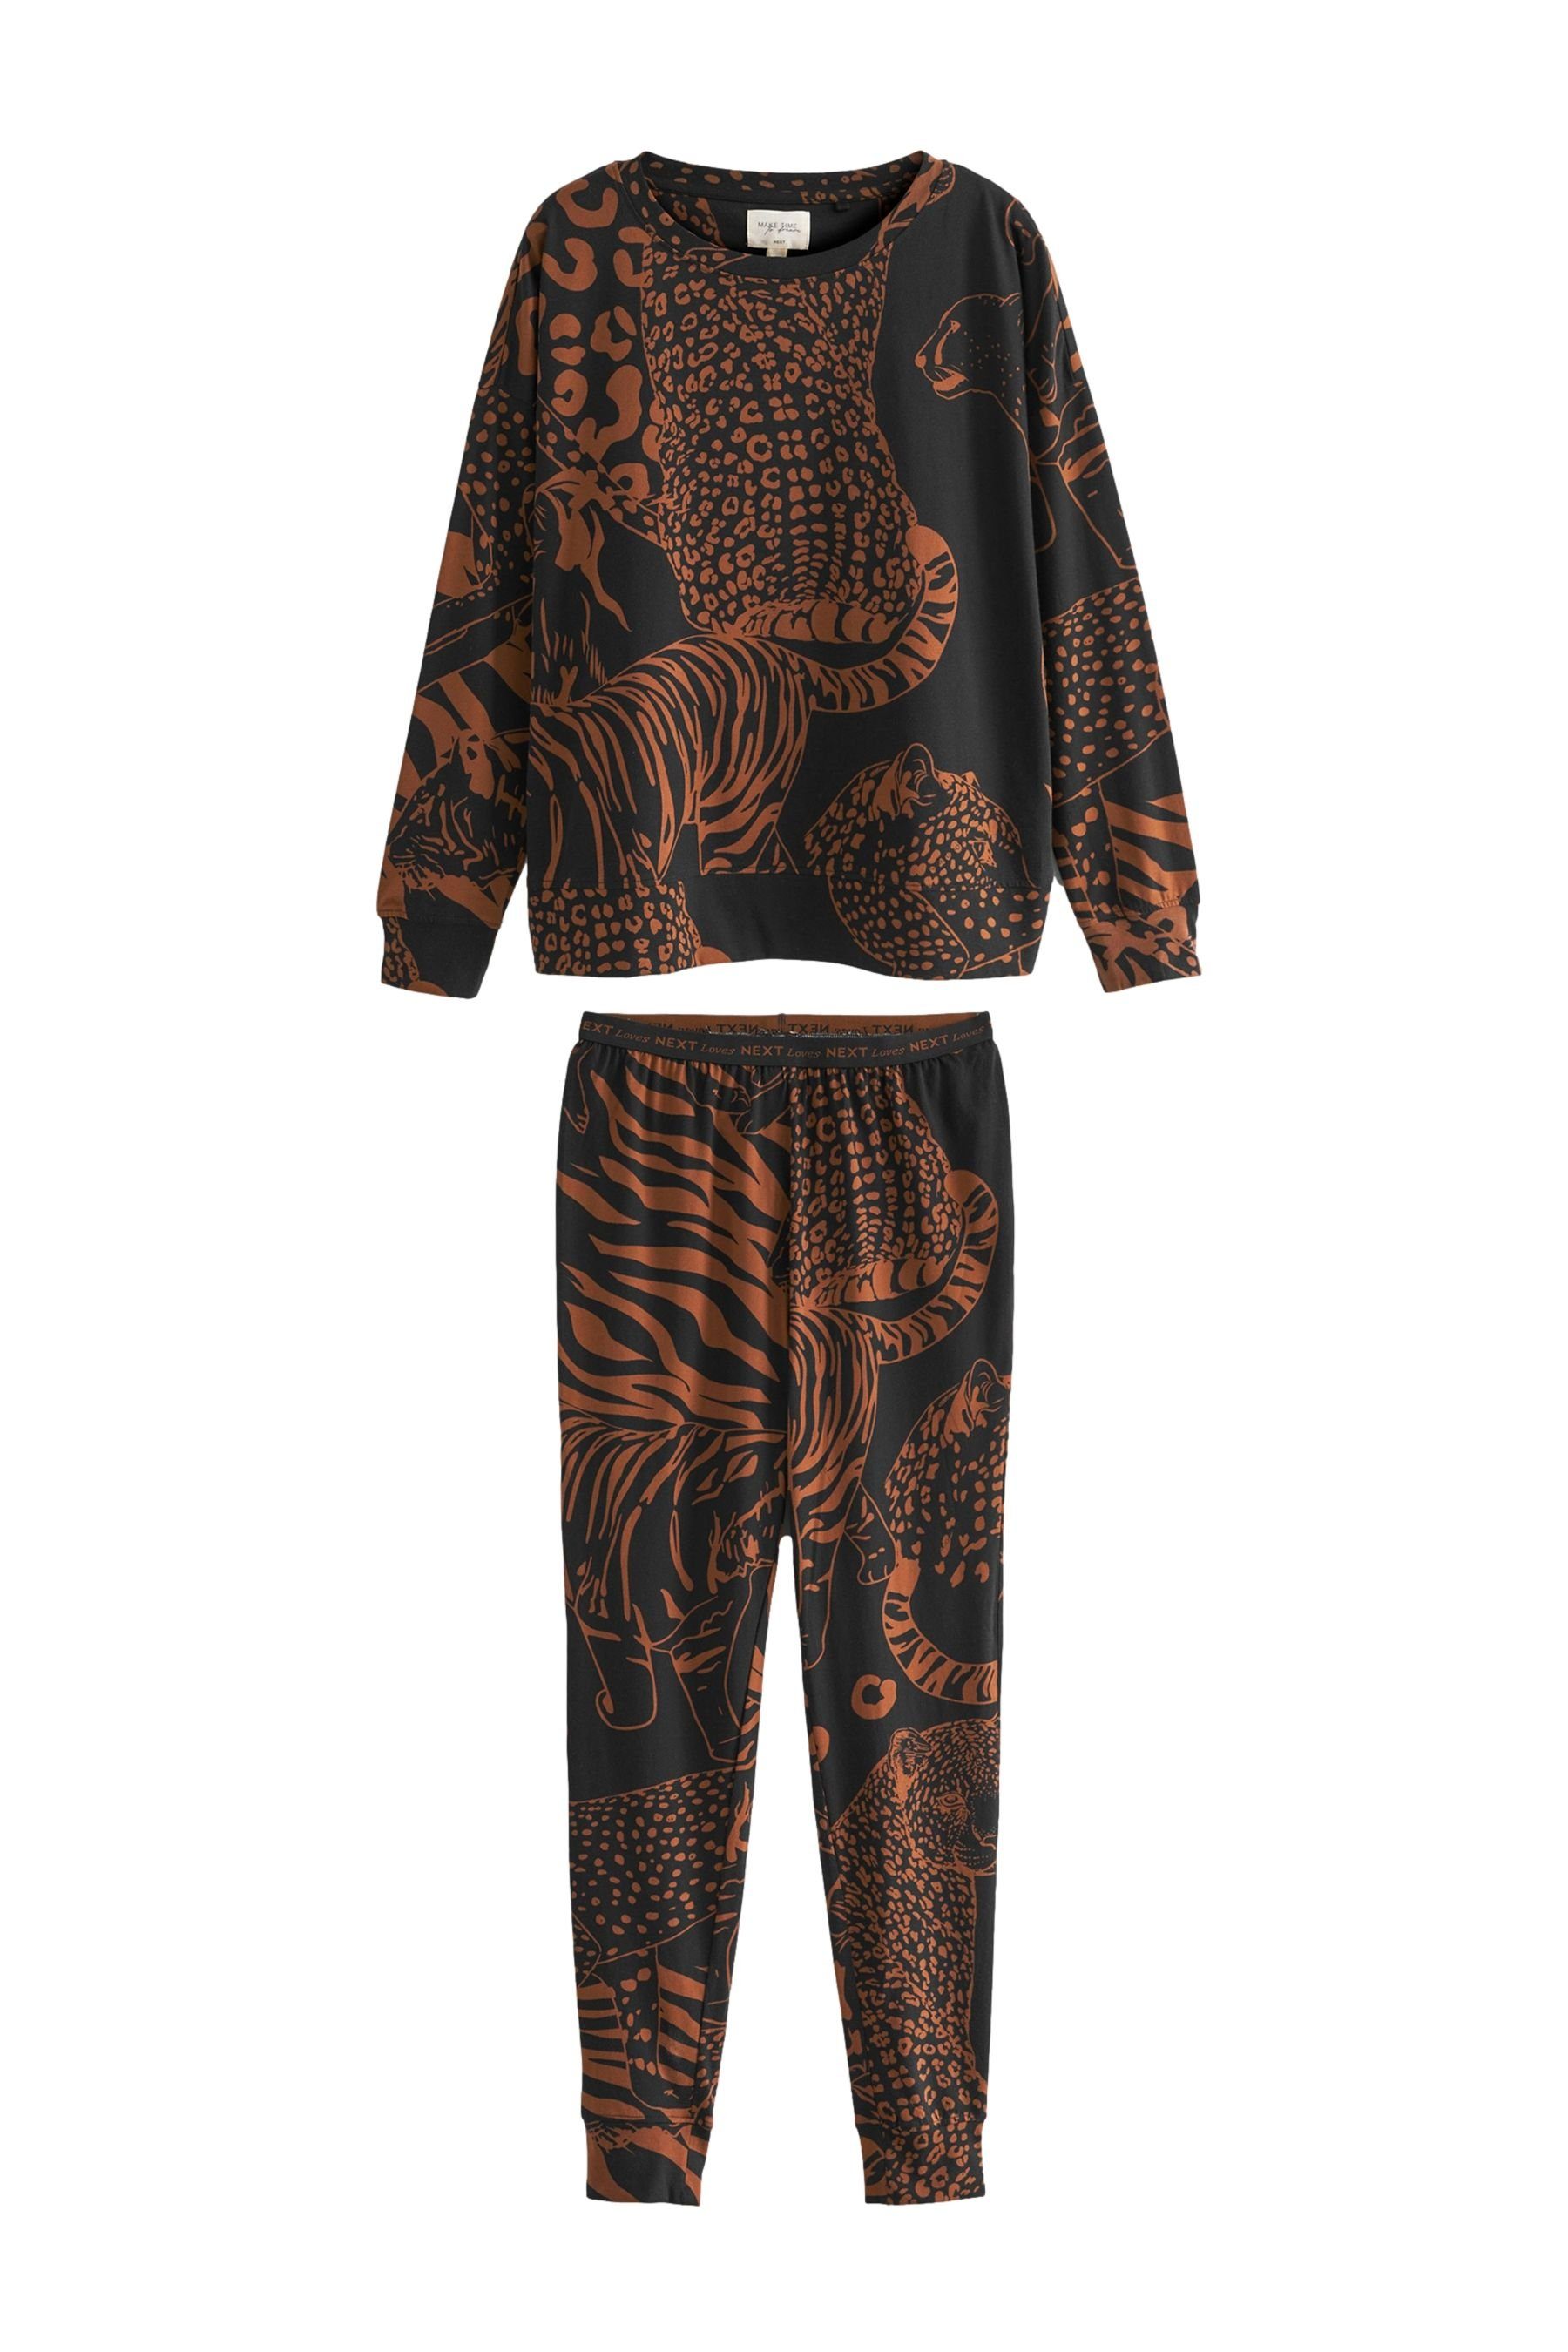 Next Pyjama Langärmeliger Pyjama aus Baumwolle (2 tlg) Black/Tan Brown Animal